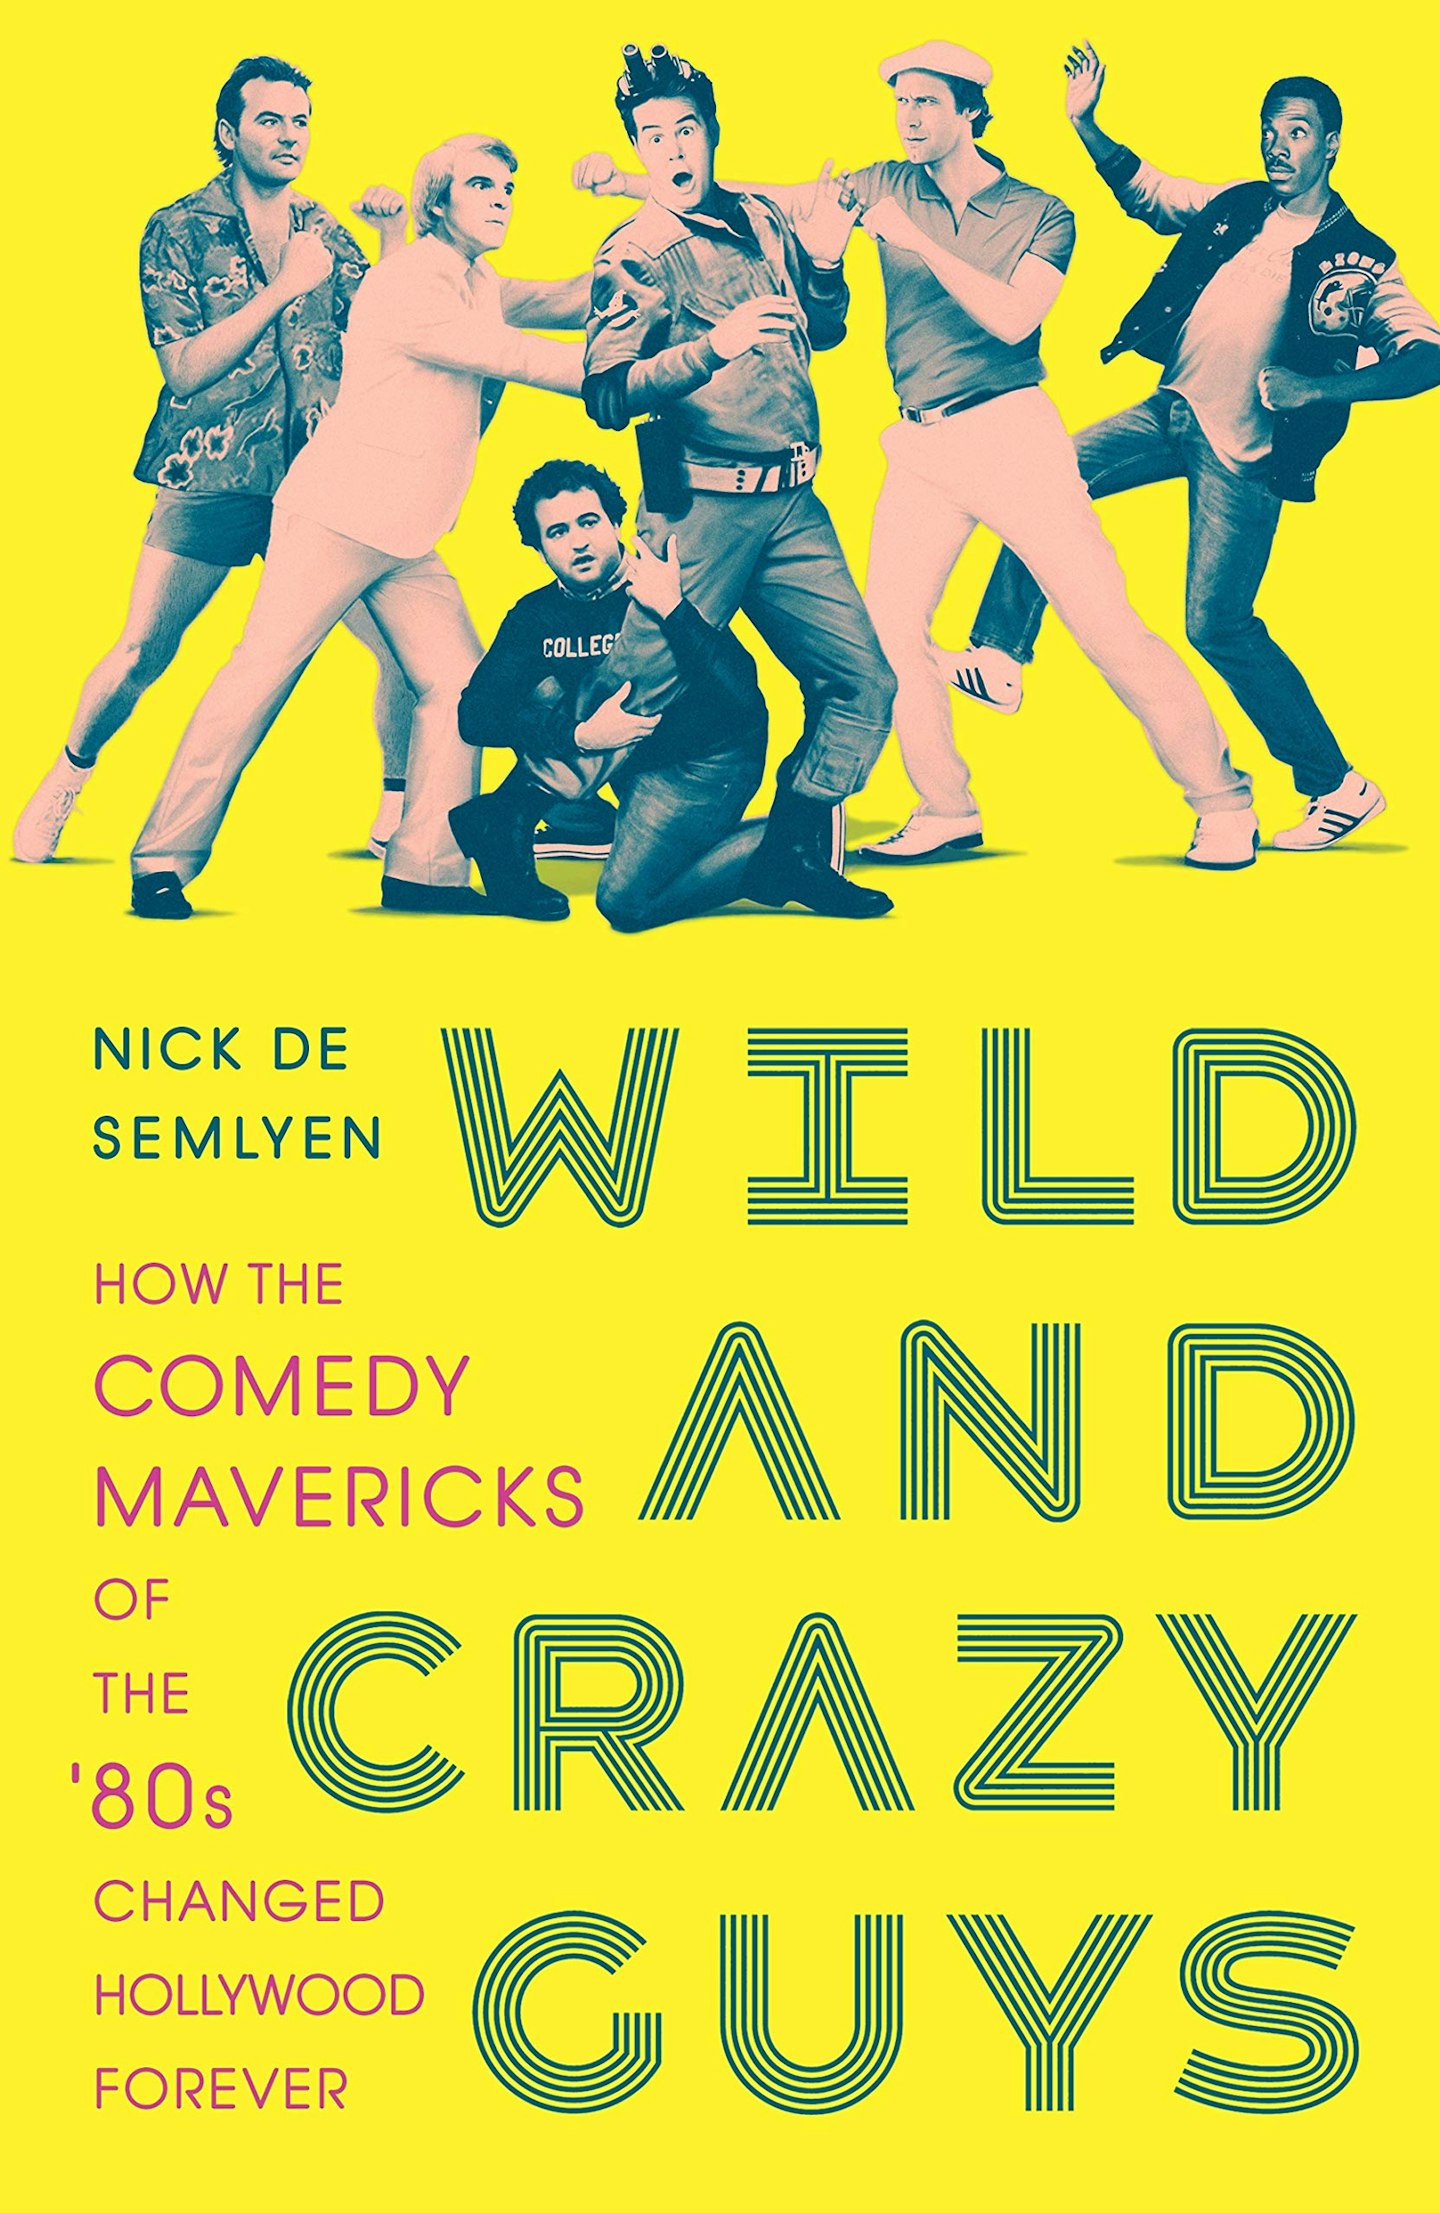 Wild And Crazy Guys